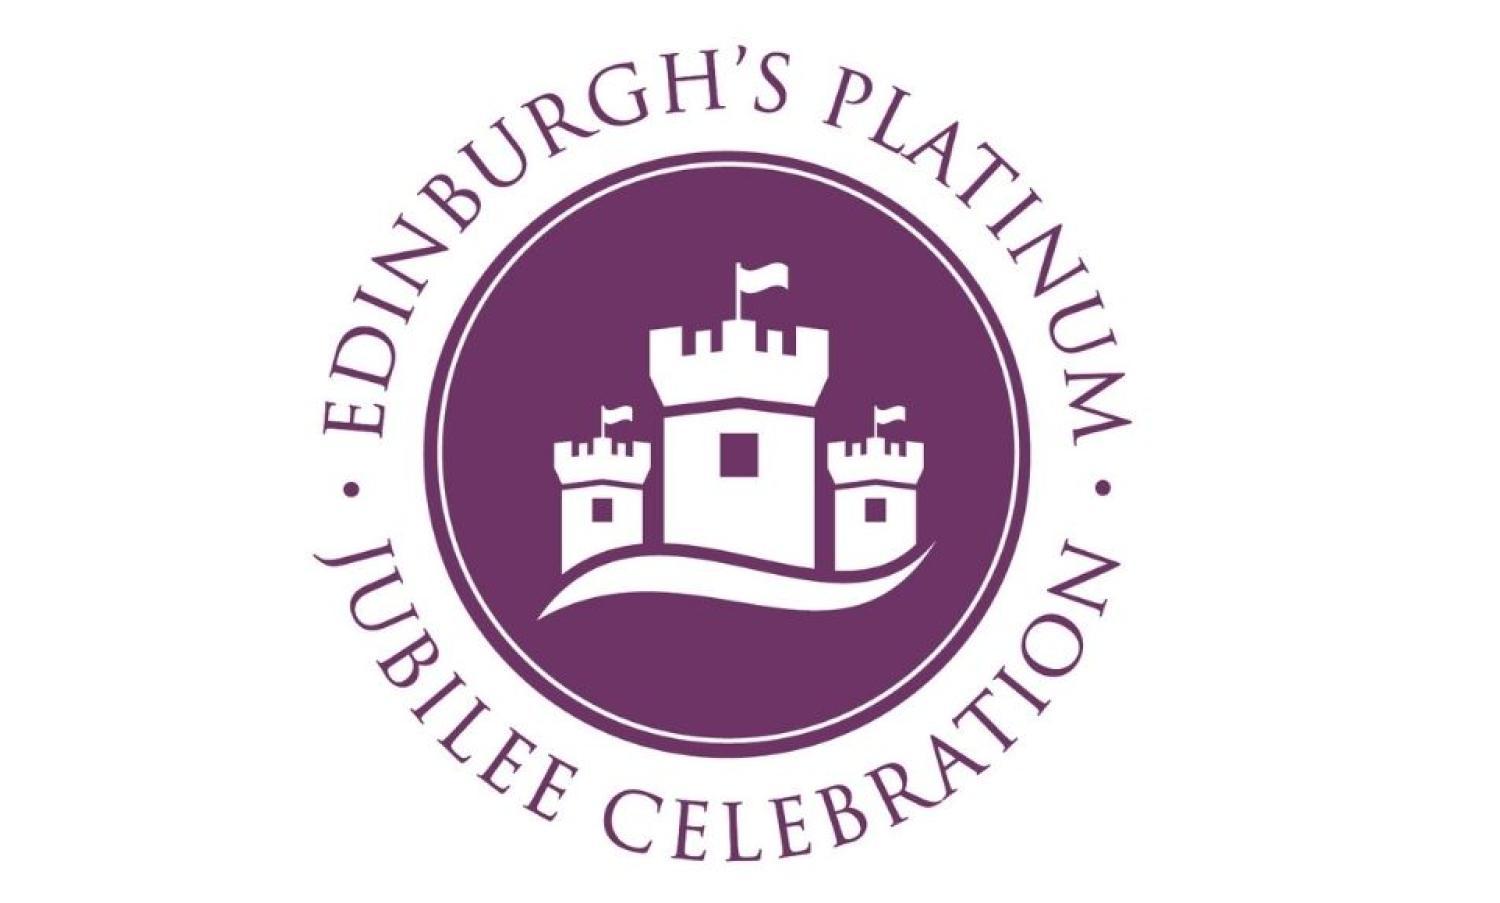 Edinburgh's Platinum Jubilee Celebration